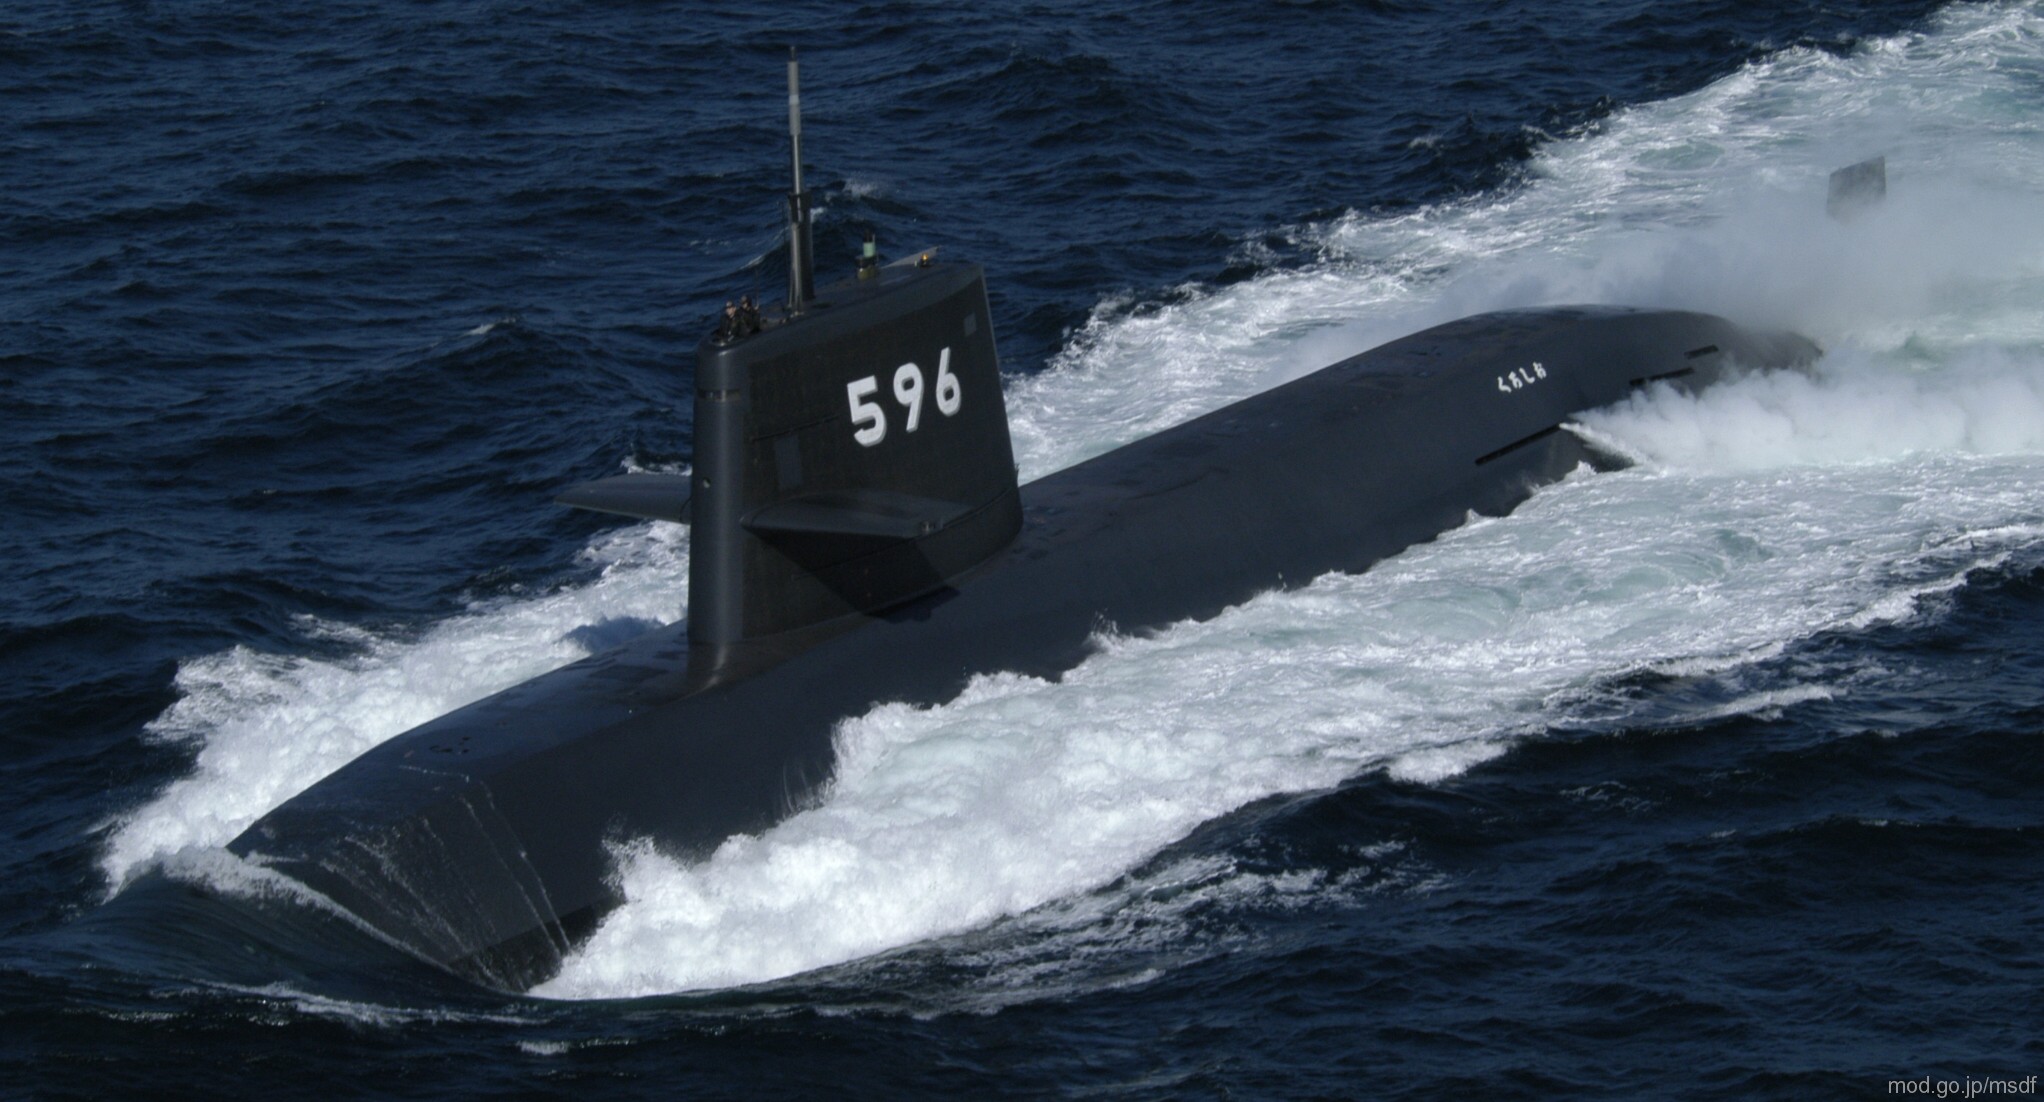 ss-596 jds kuroshio oyashio class attack submarine japan maritime self defense force jmsdf 03